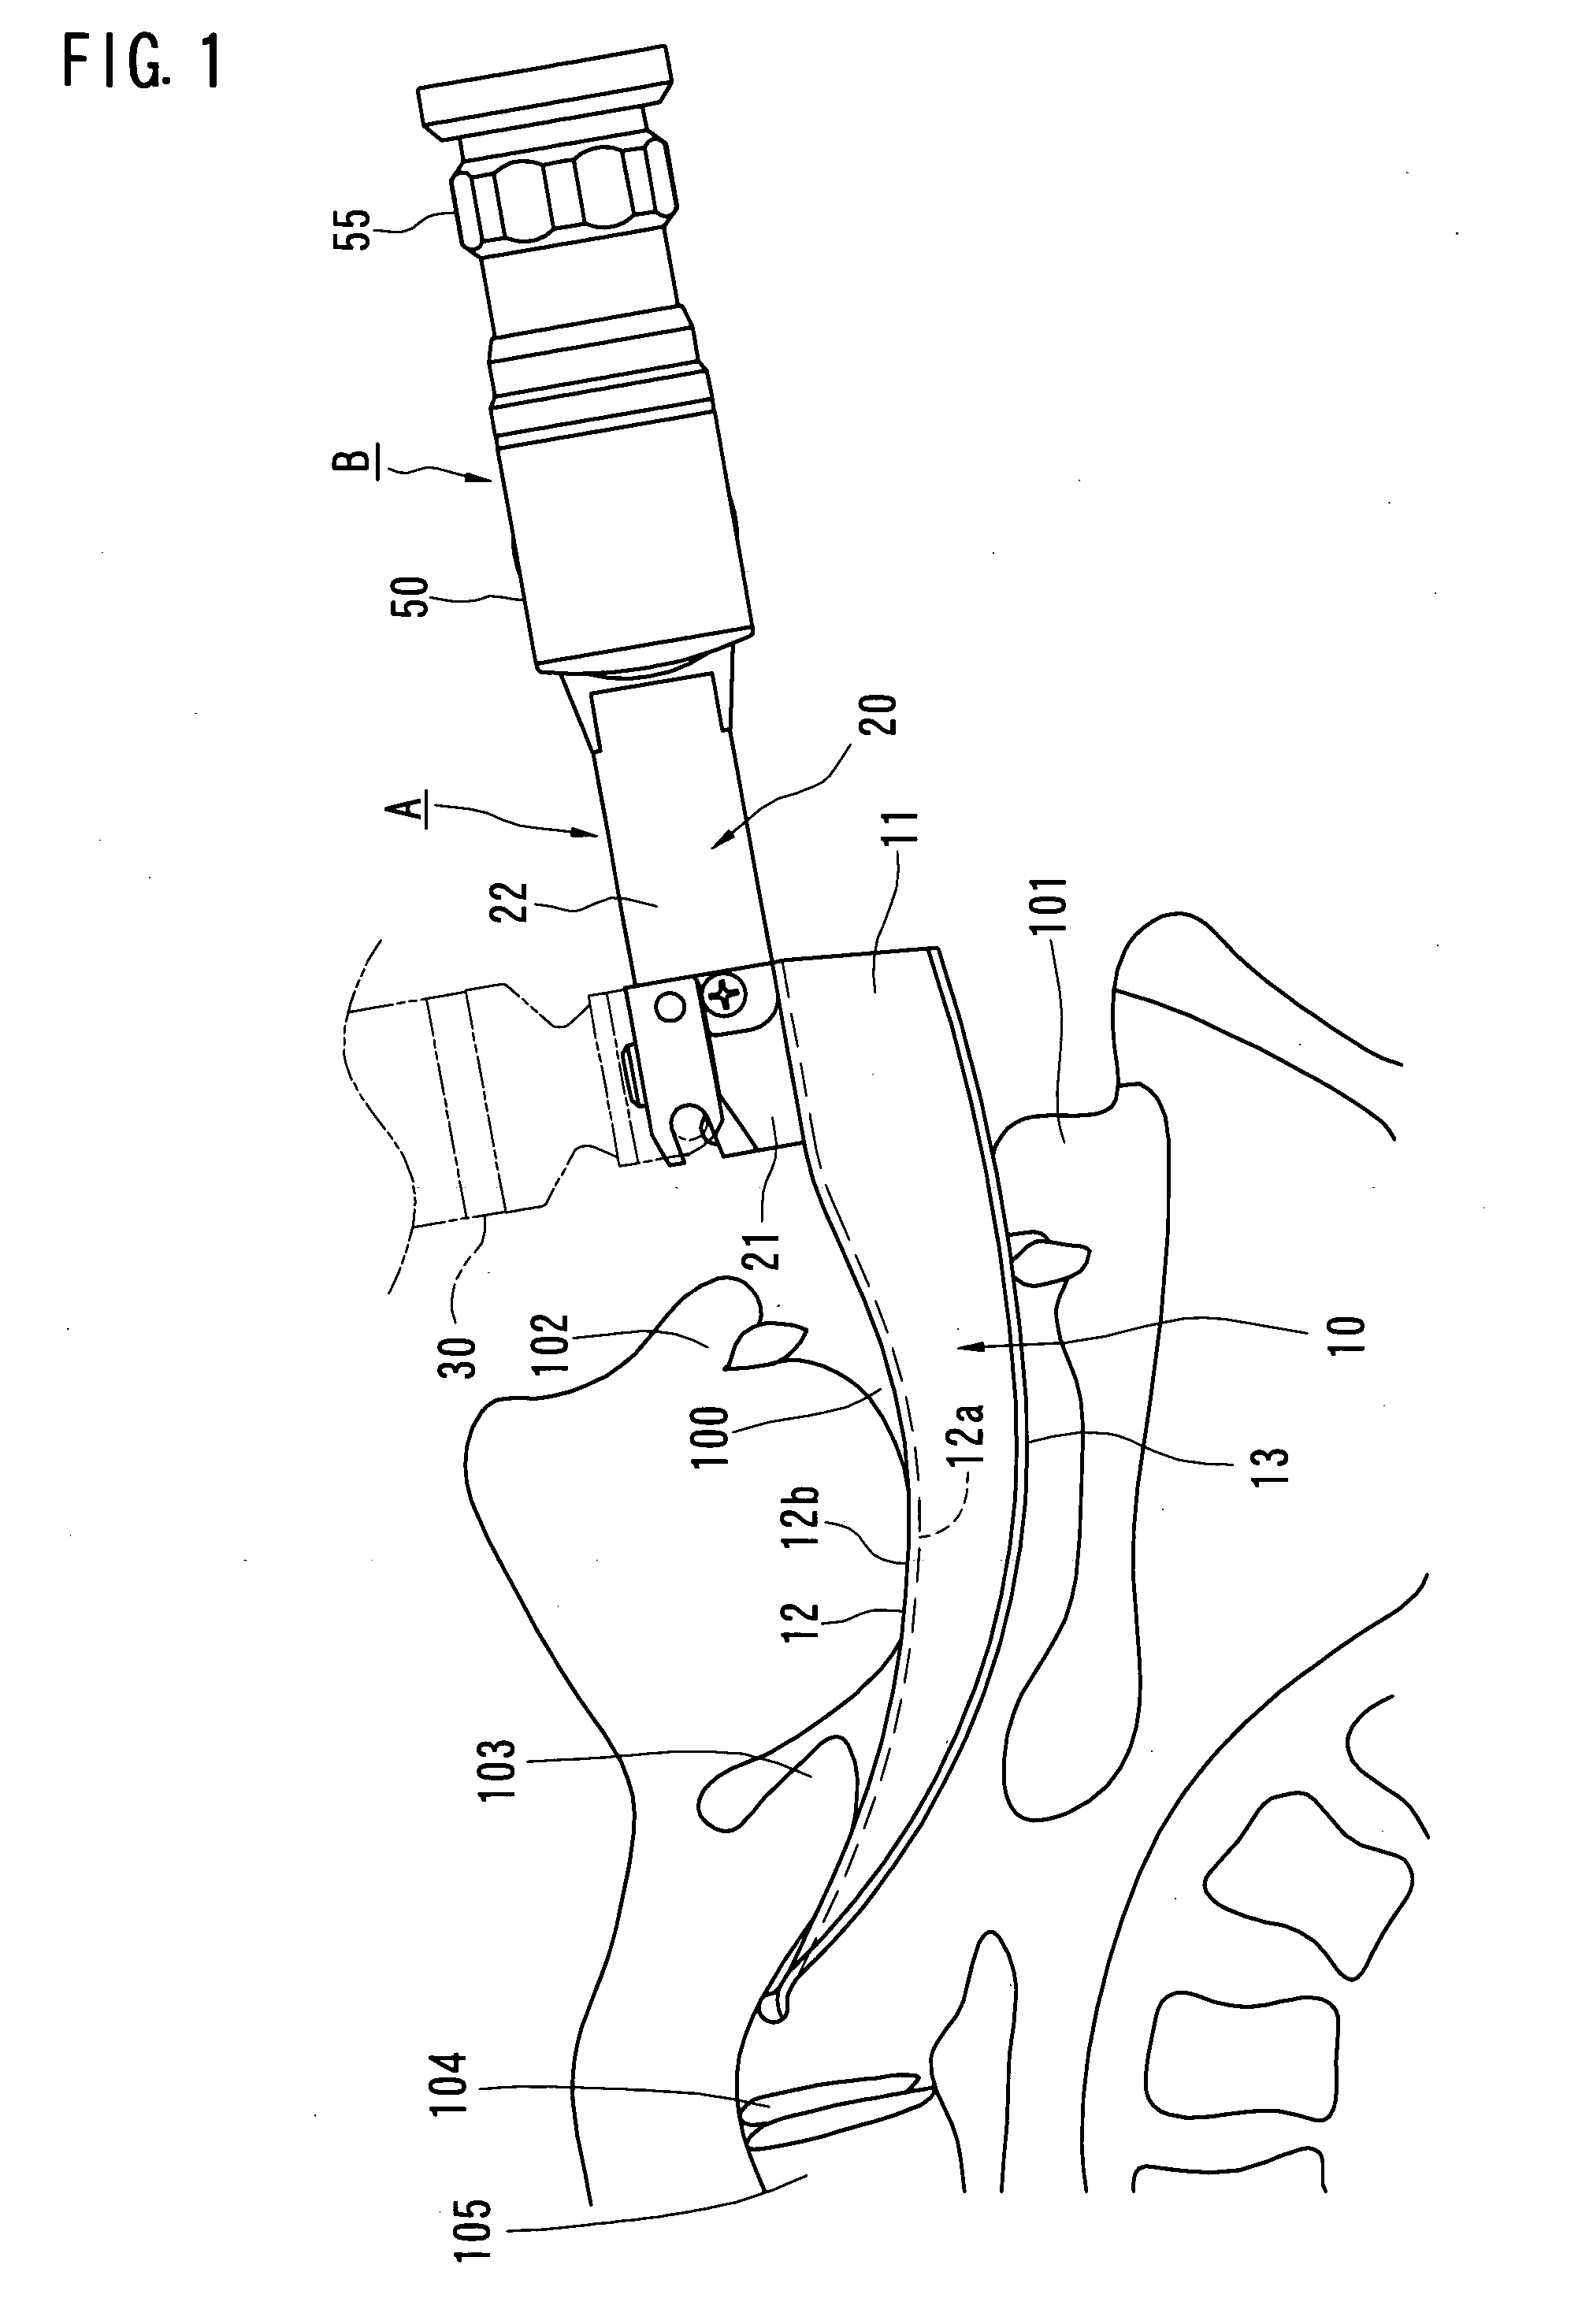 Airway tube guiding apparatus